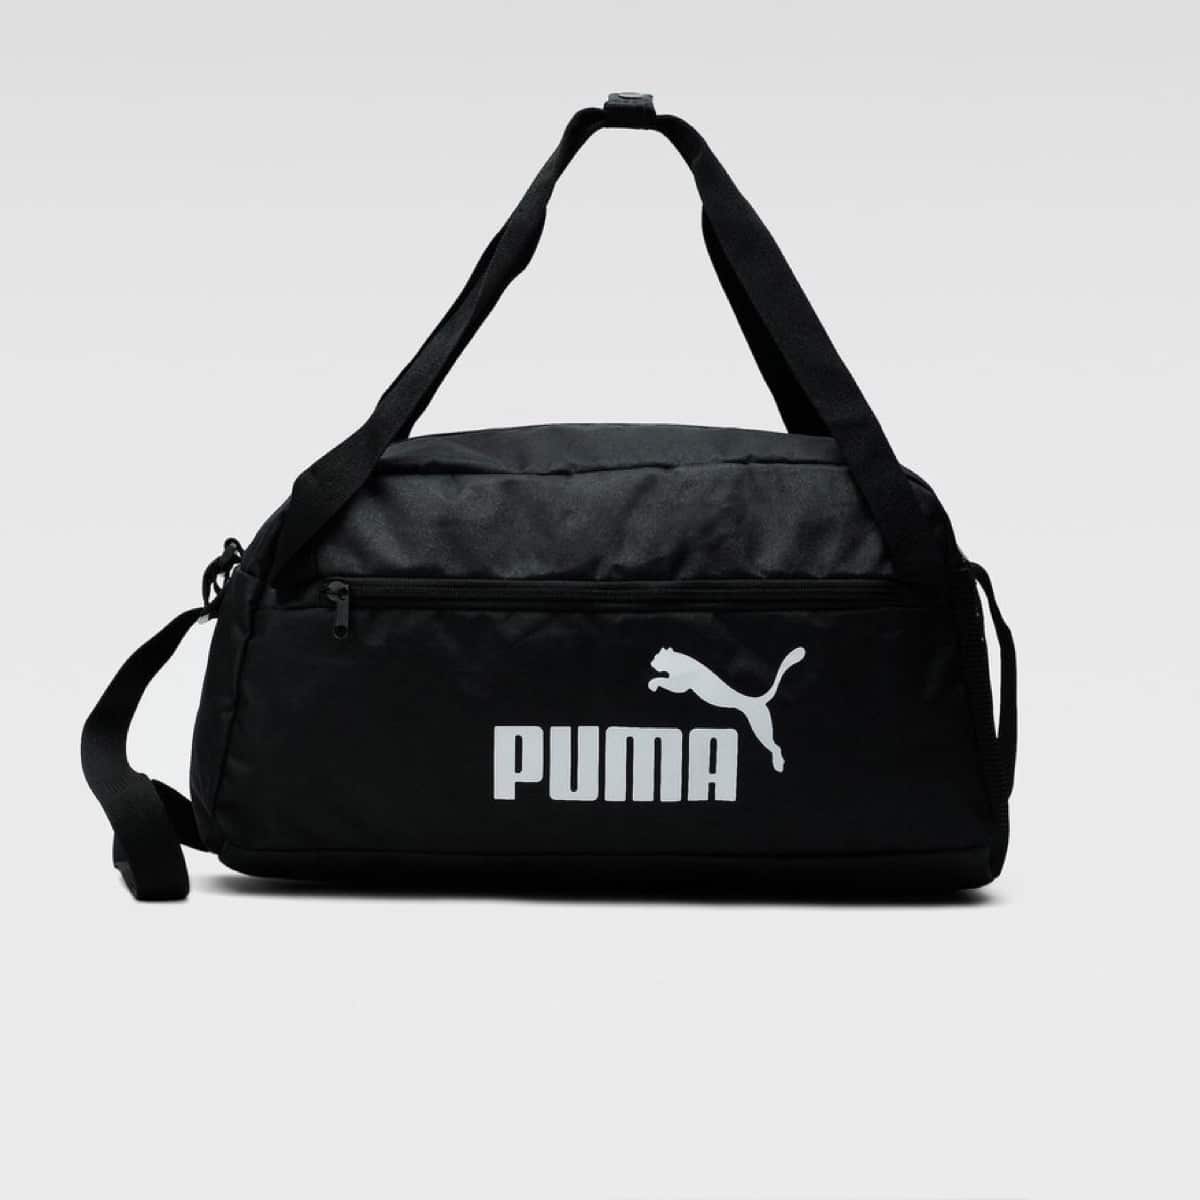 Puma – 119,99